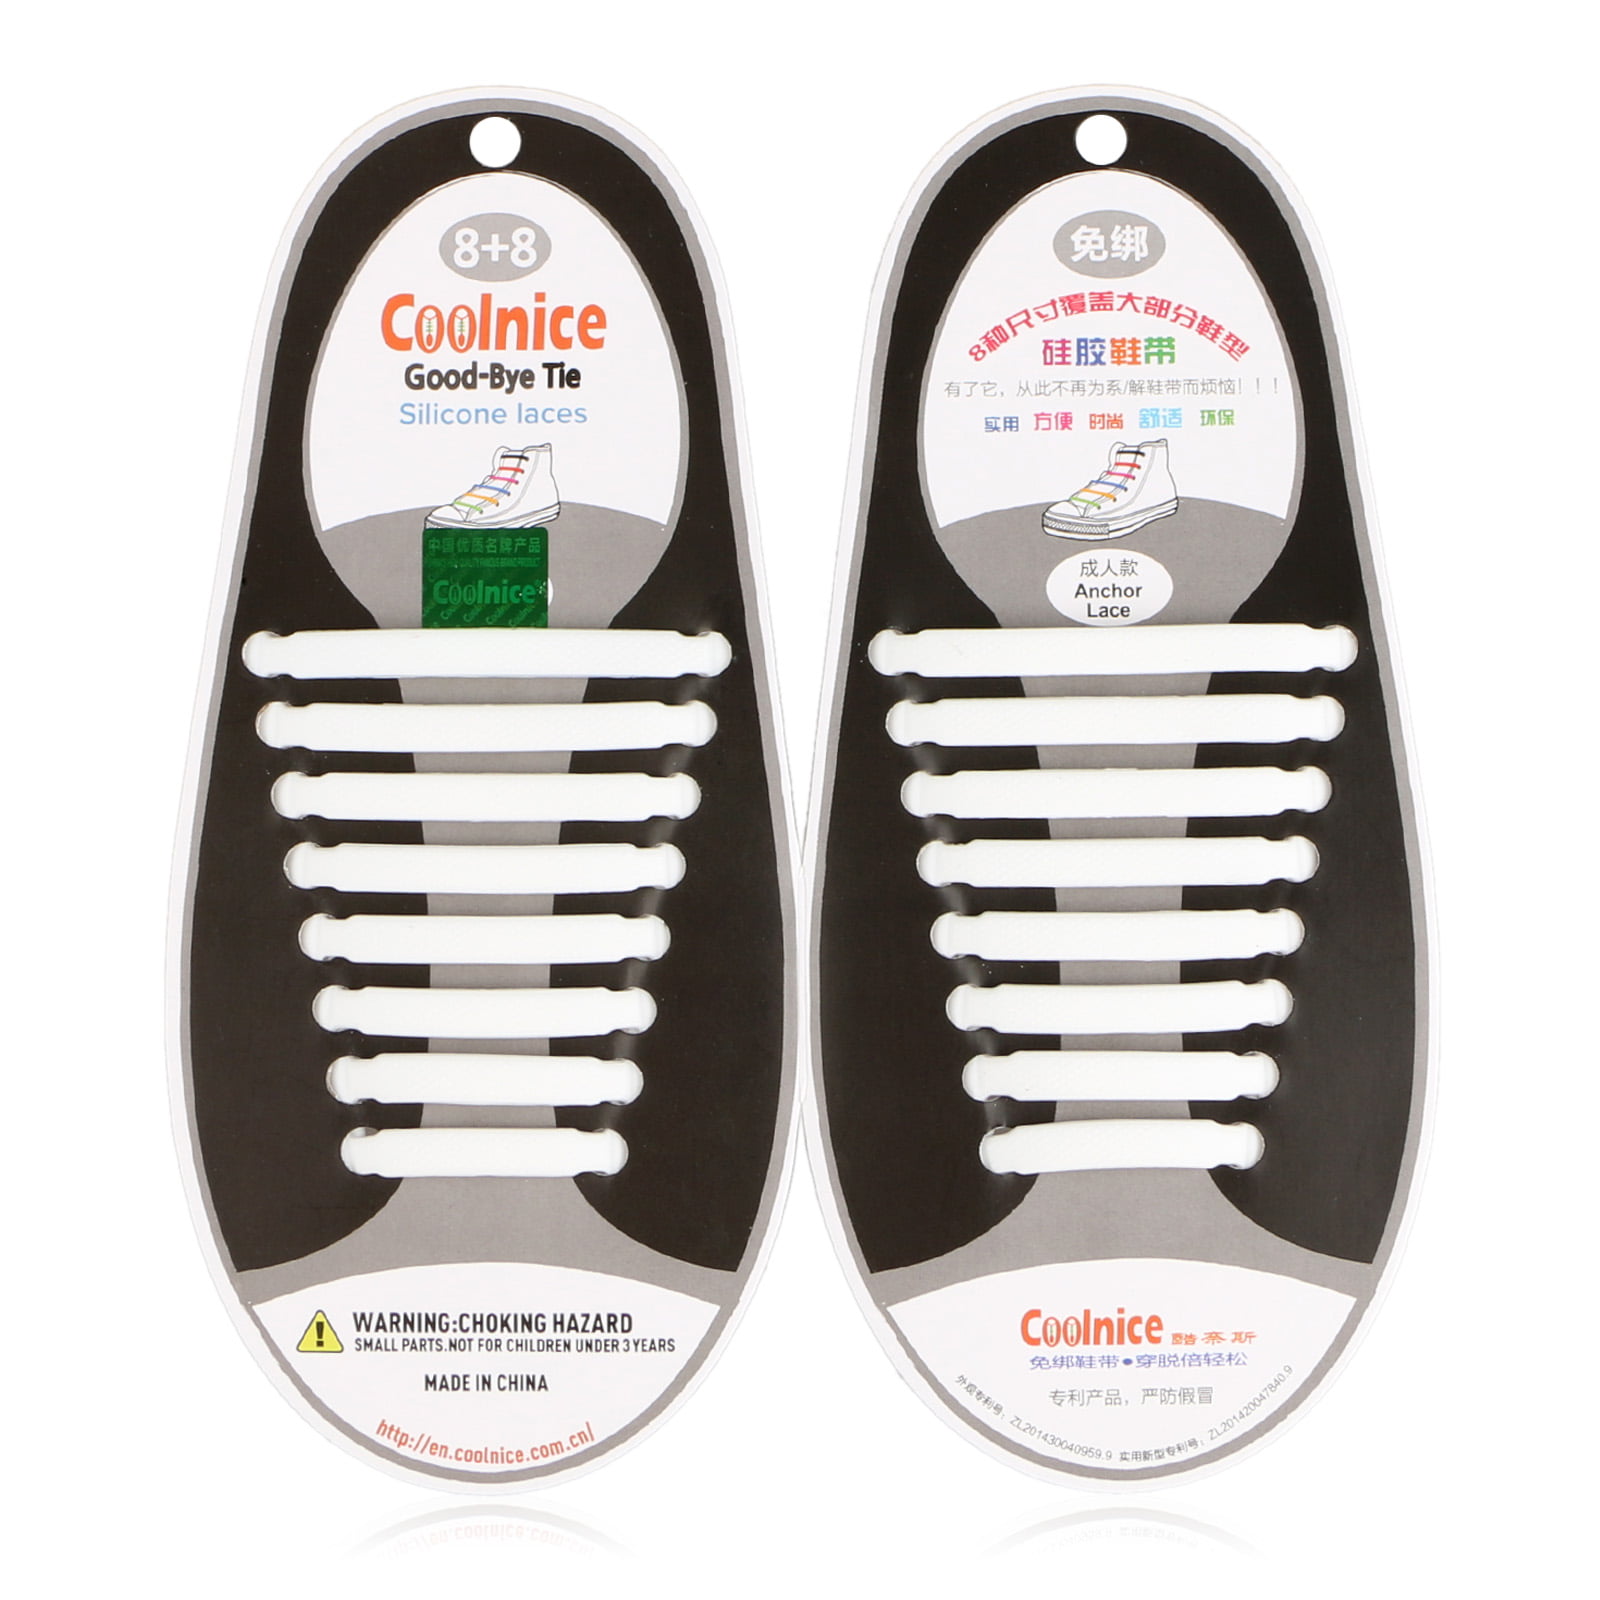 silicone shoelaces